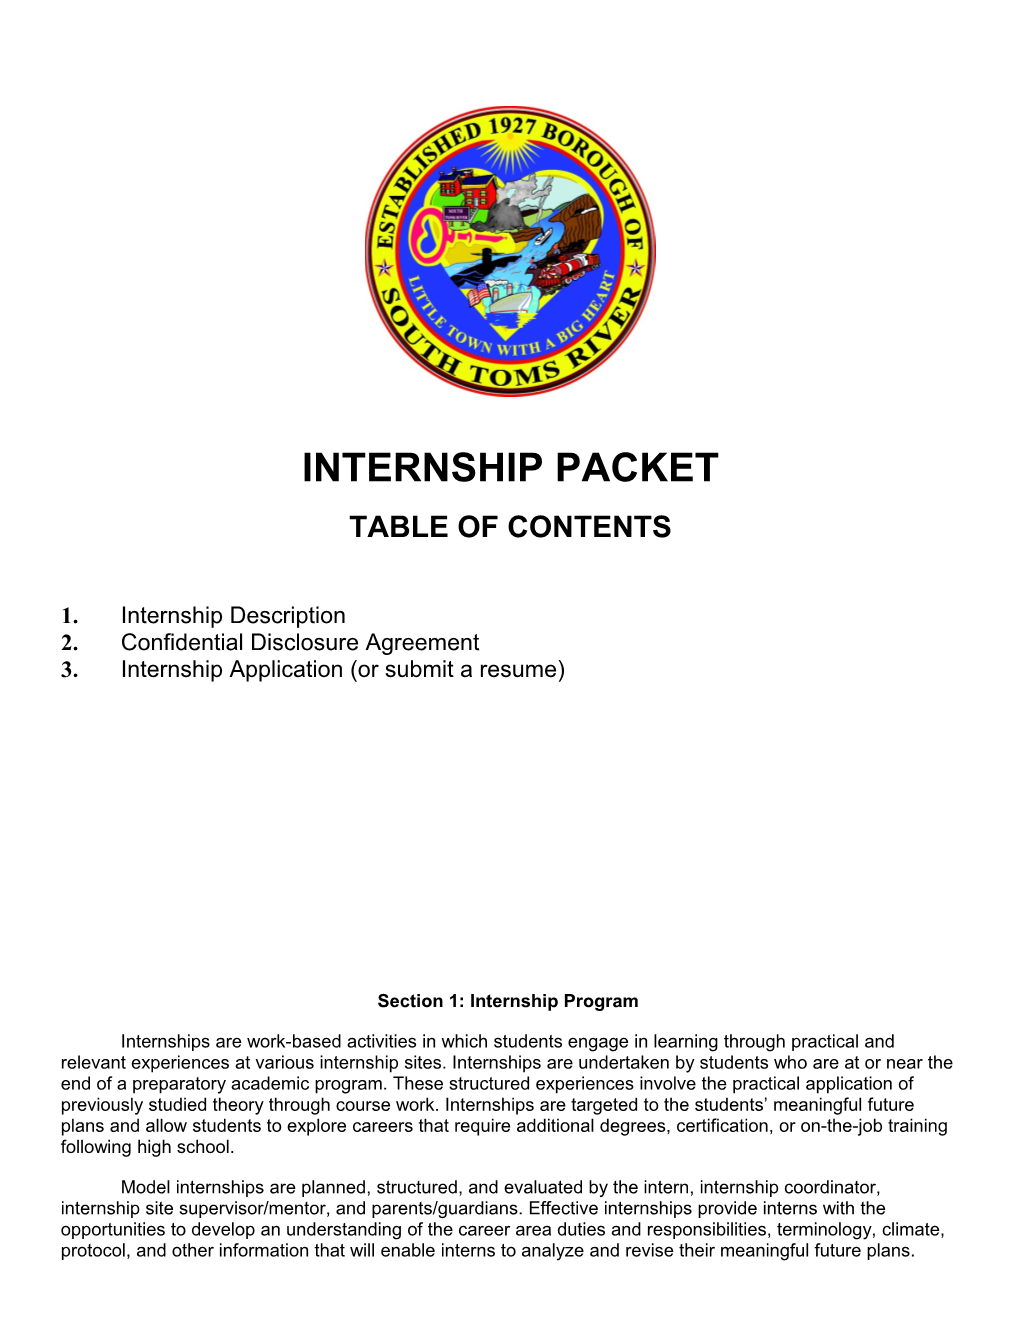 Internship Packet